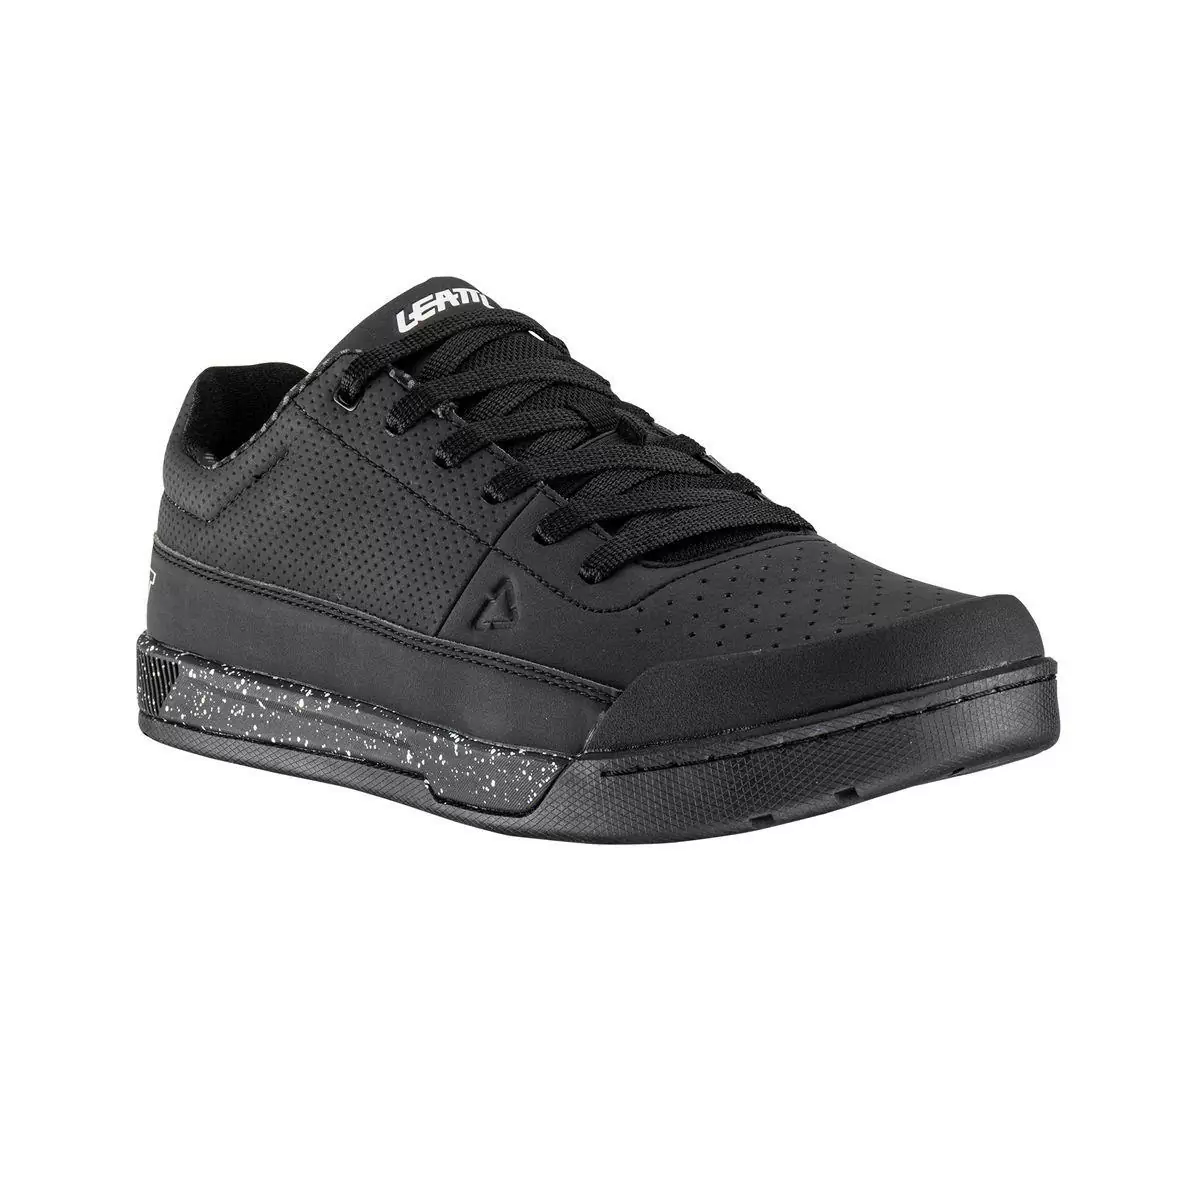 Mtb Shoes 2.0 Flat Black Size 40 #1